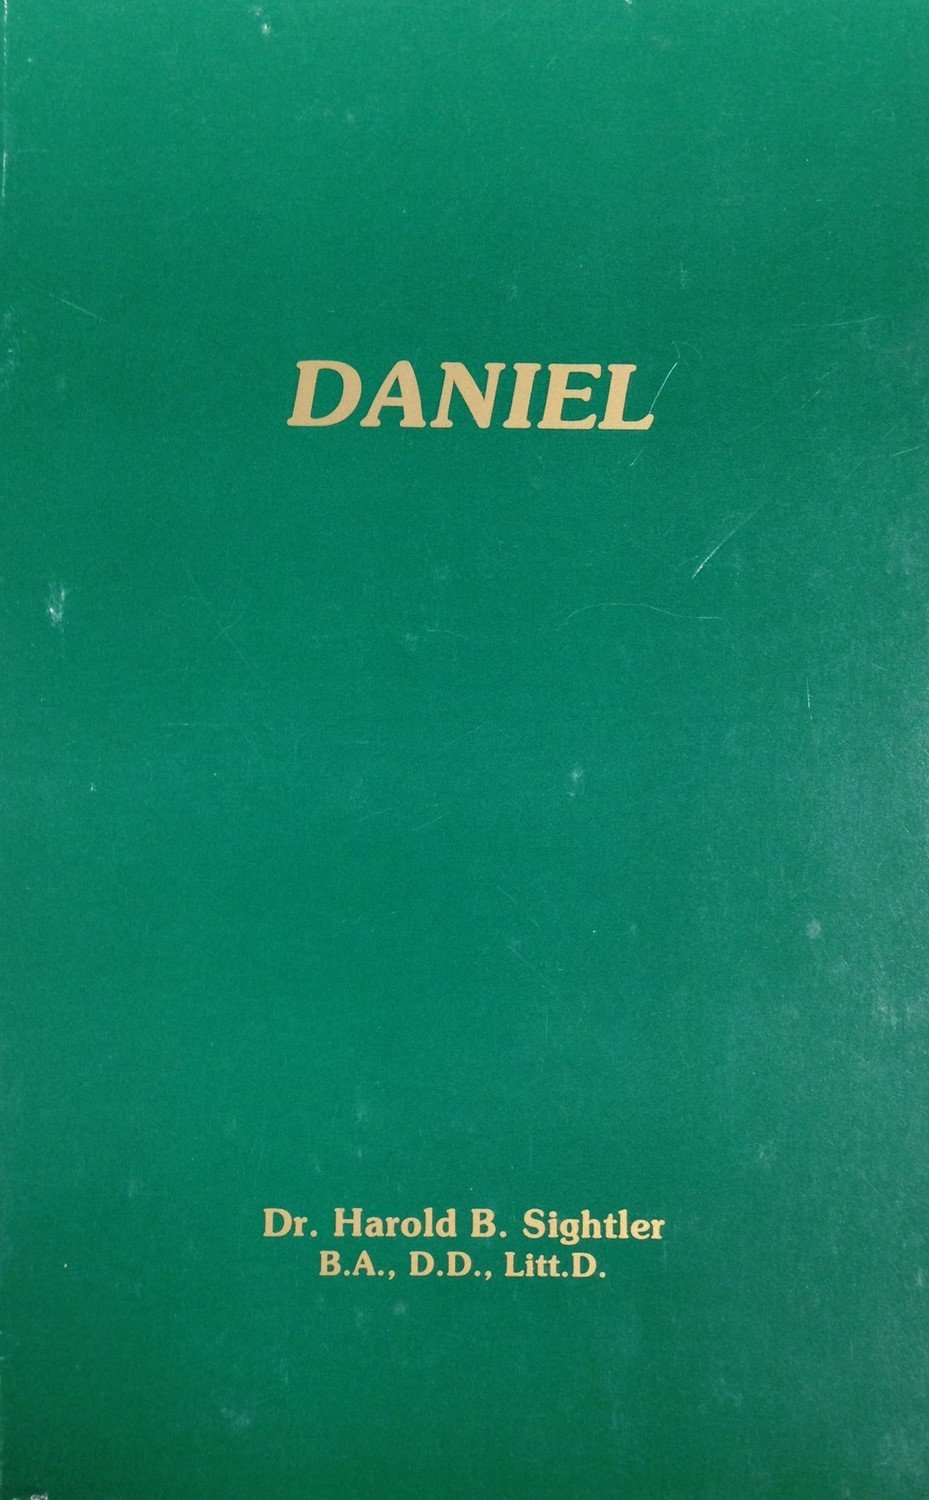 Daniel by Dr. Harold B. Sightler